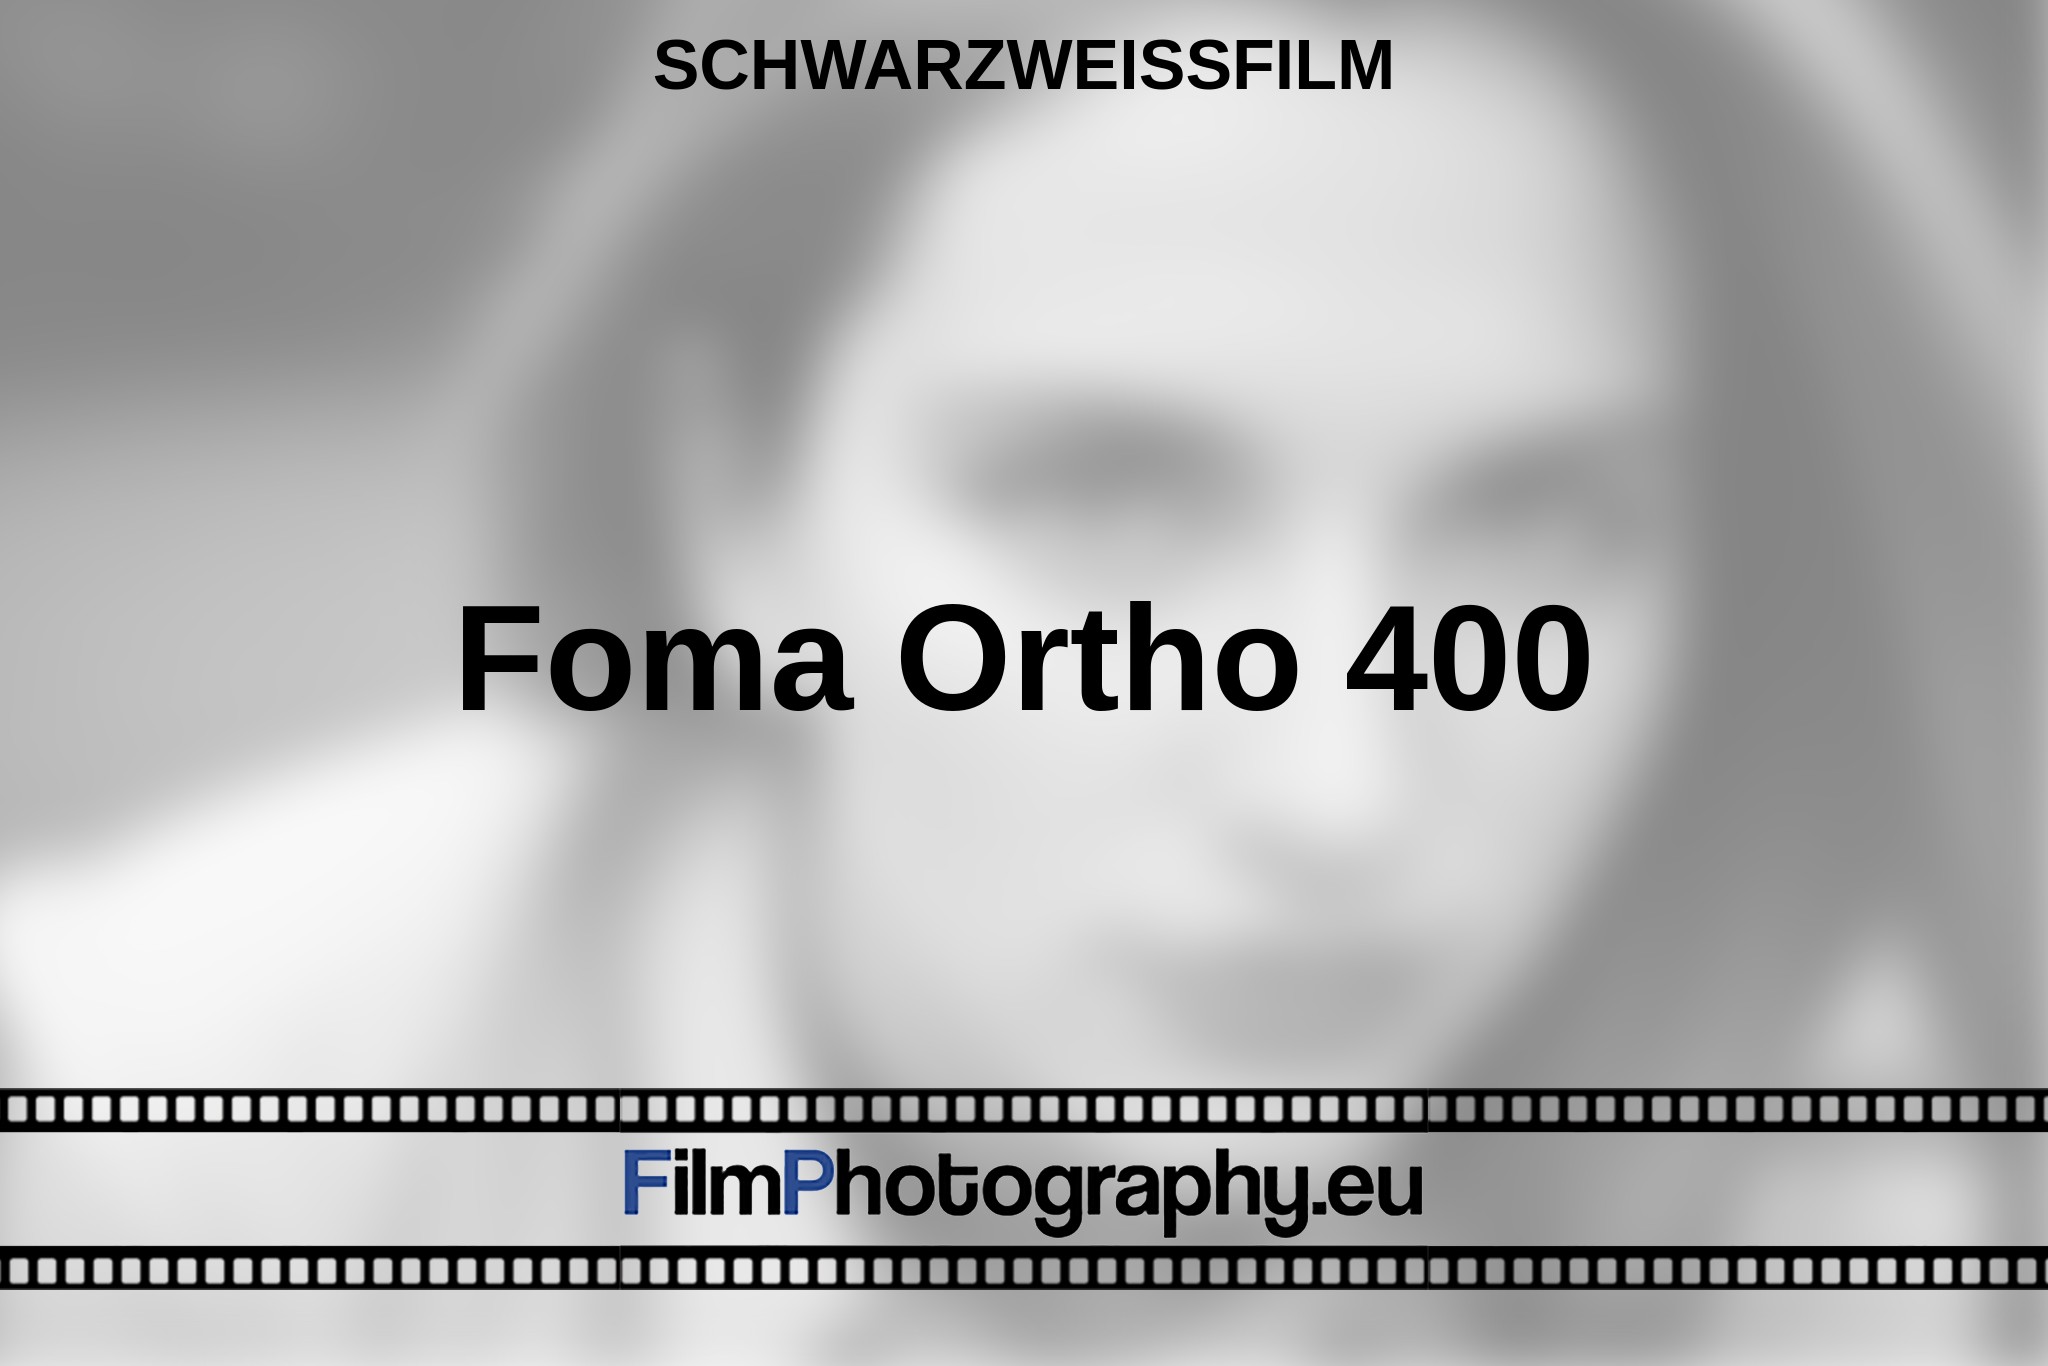 foma-ortho-400-schwarzweißfilm-bnv.jpg